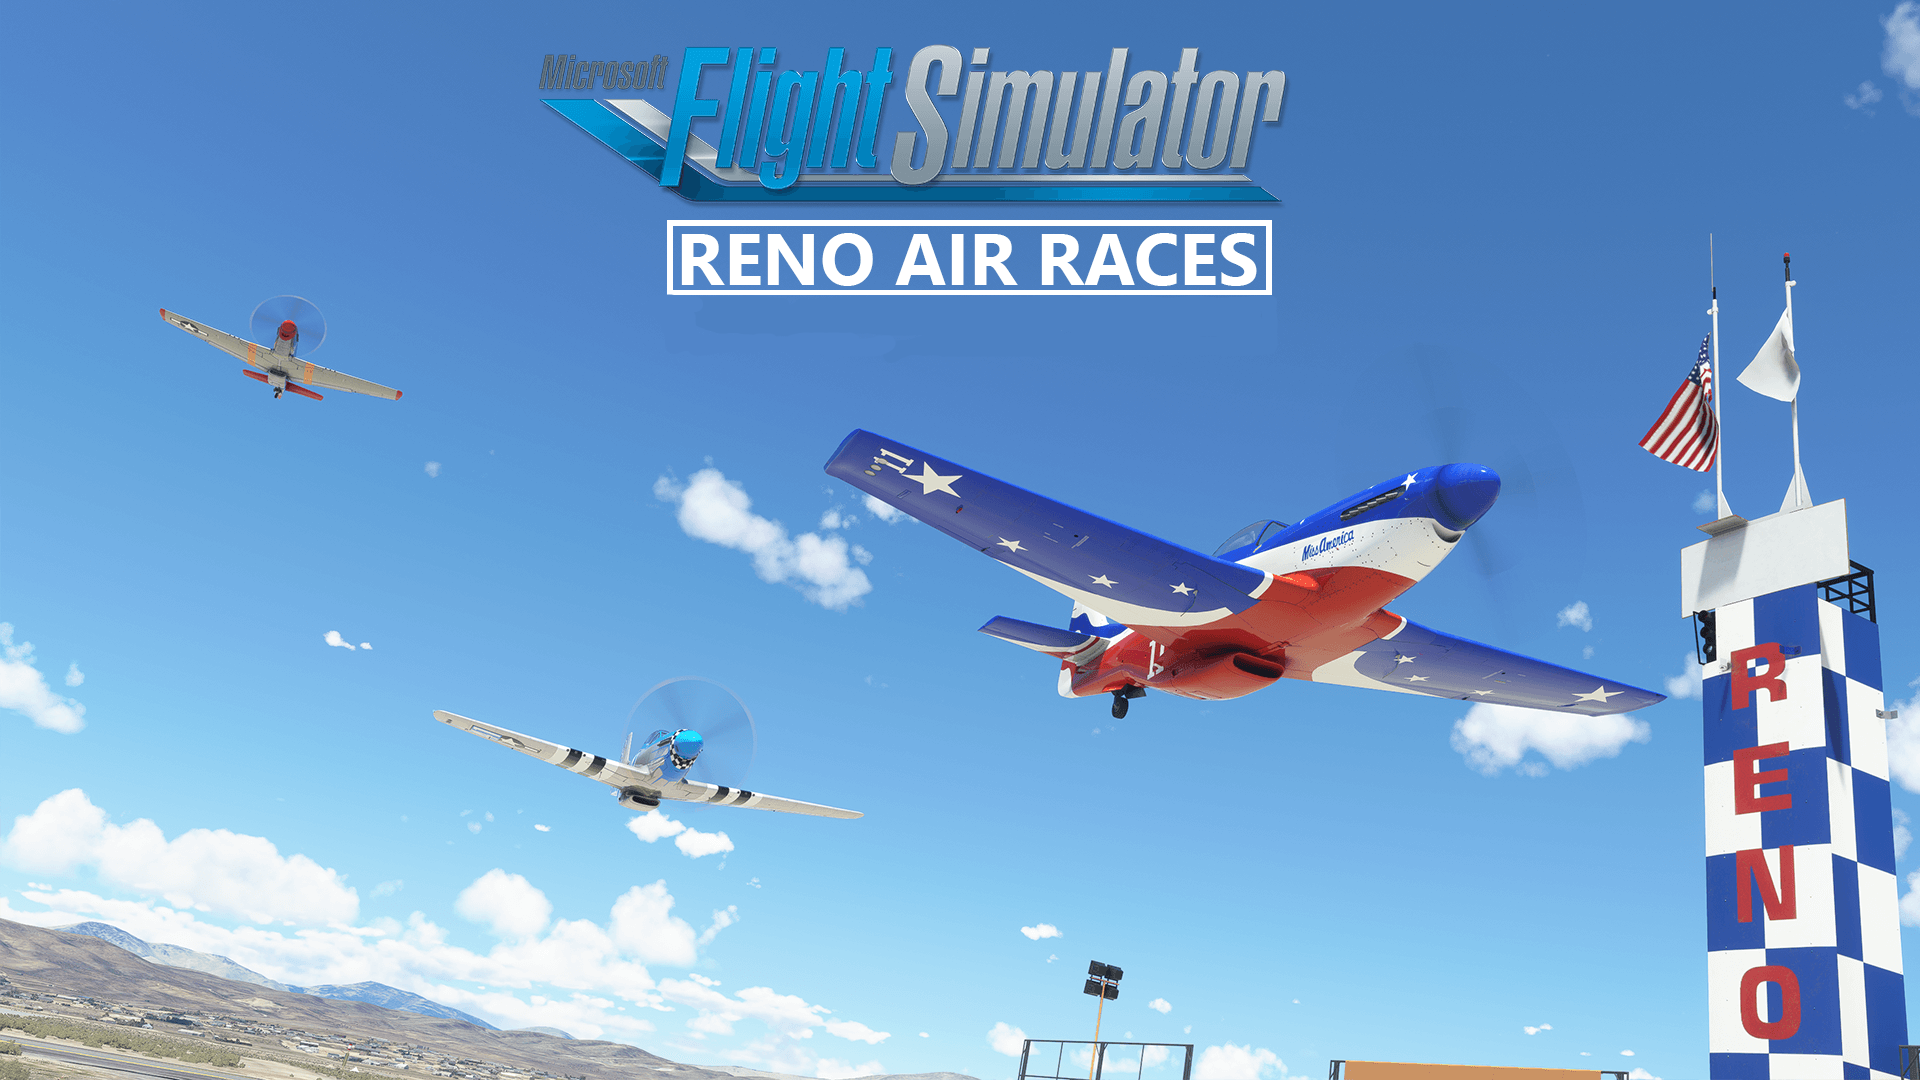 Flight Simulator 2020 Pc Mídia Digital